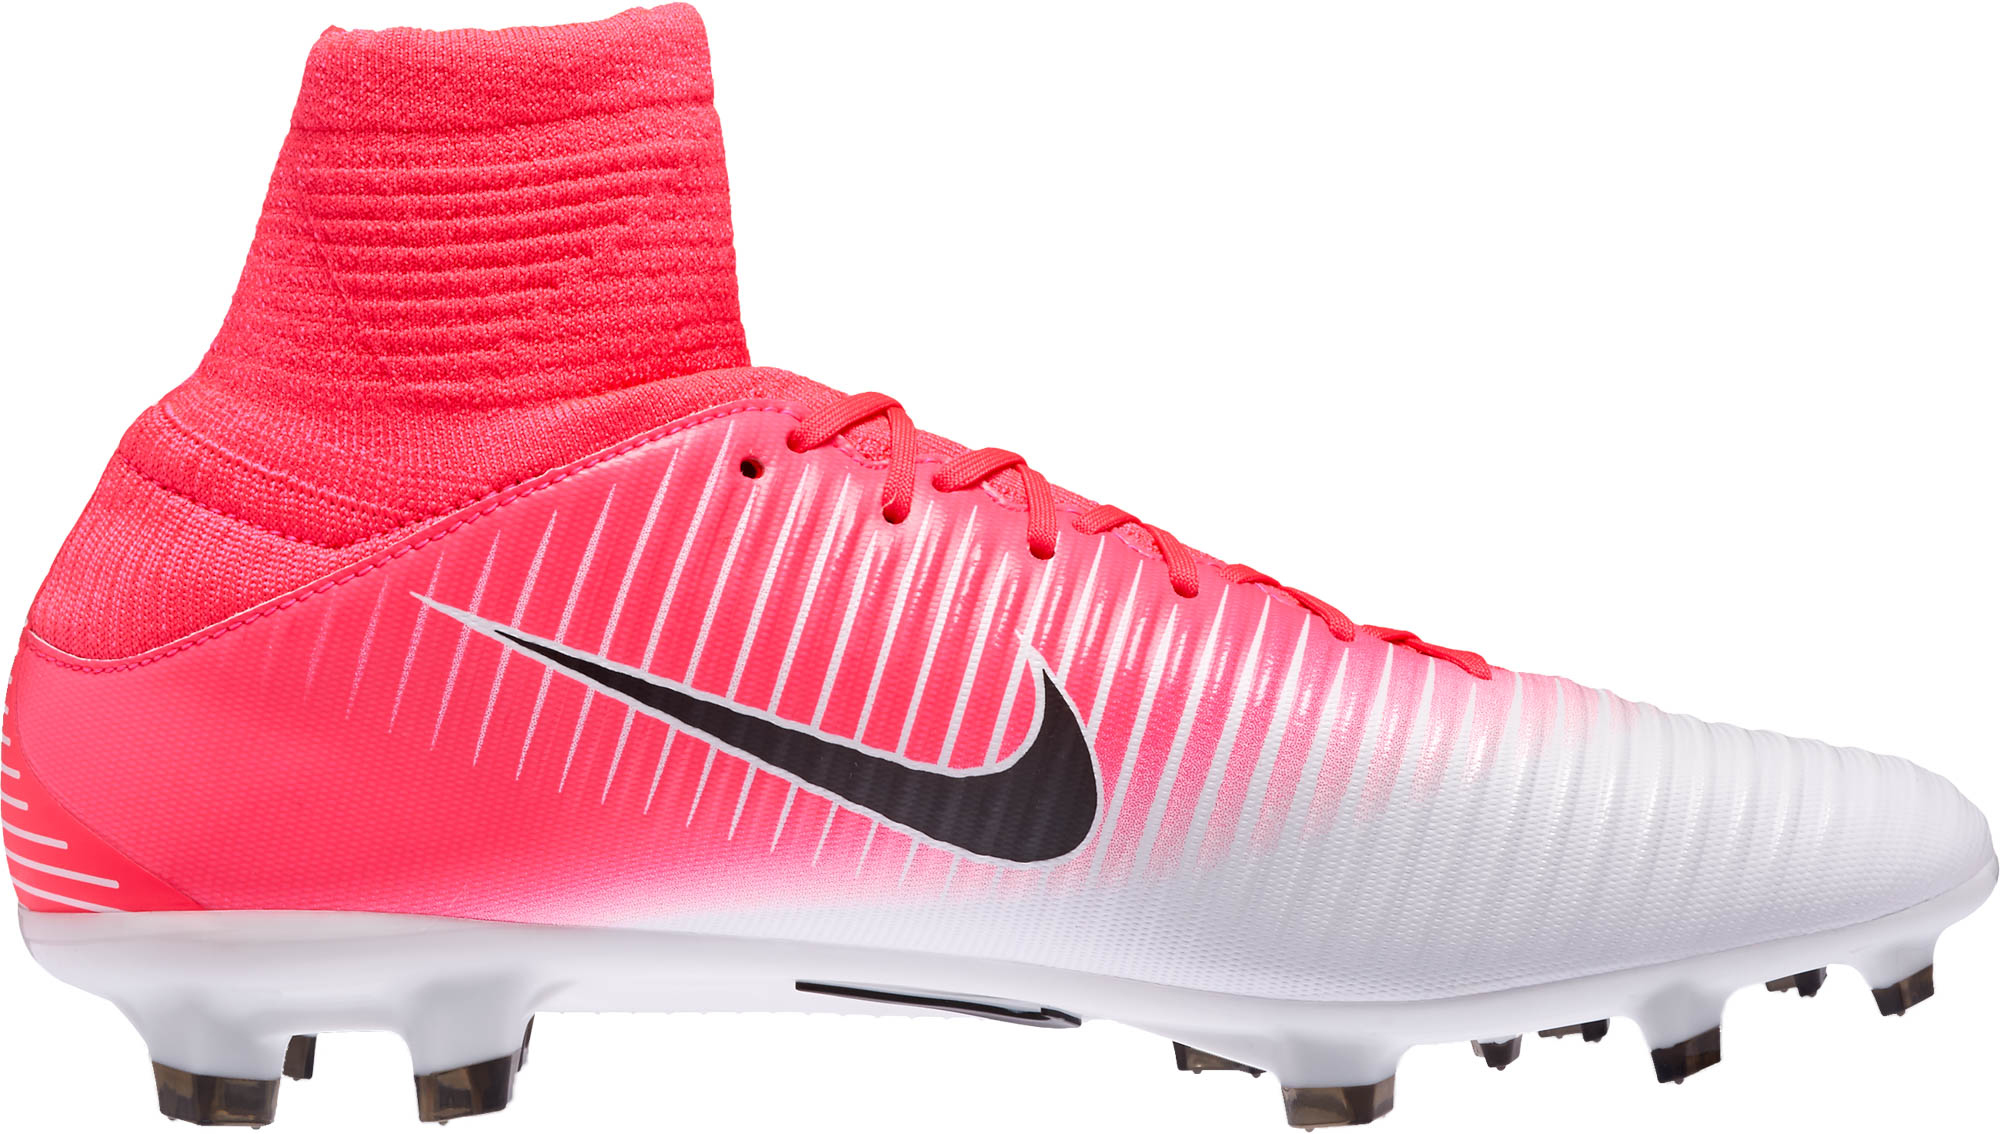 Anunciante Sin lugar a dudas Alianza Nike Mercurial Veloce lll FG - Pink Soccer Cleats